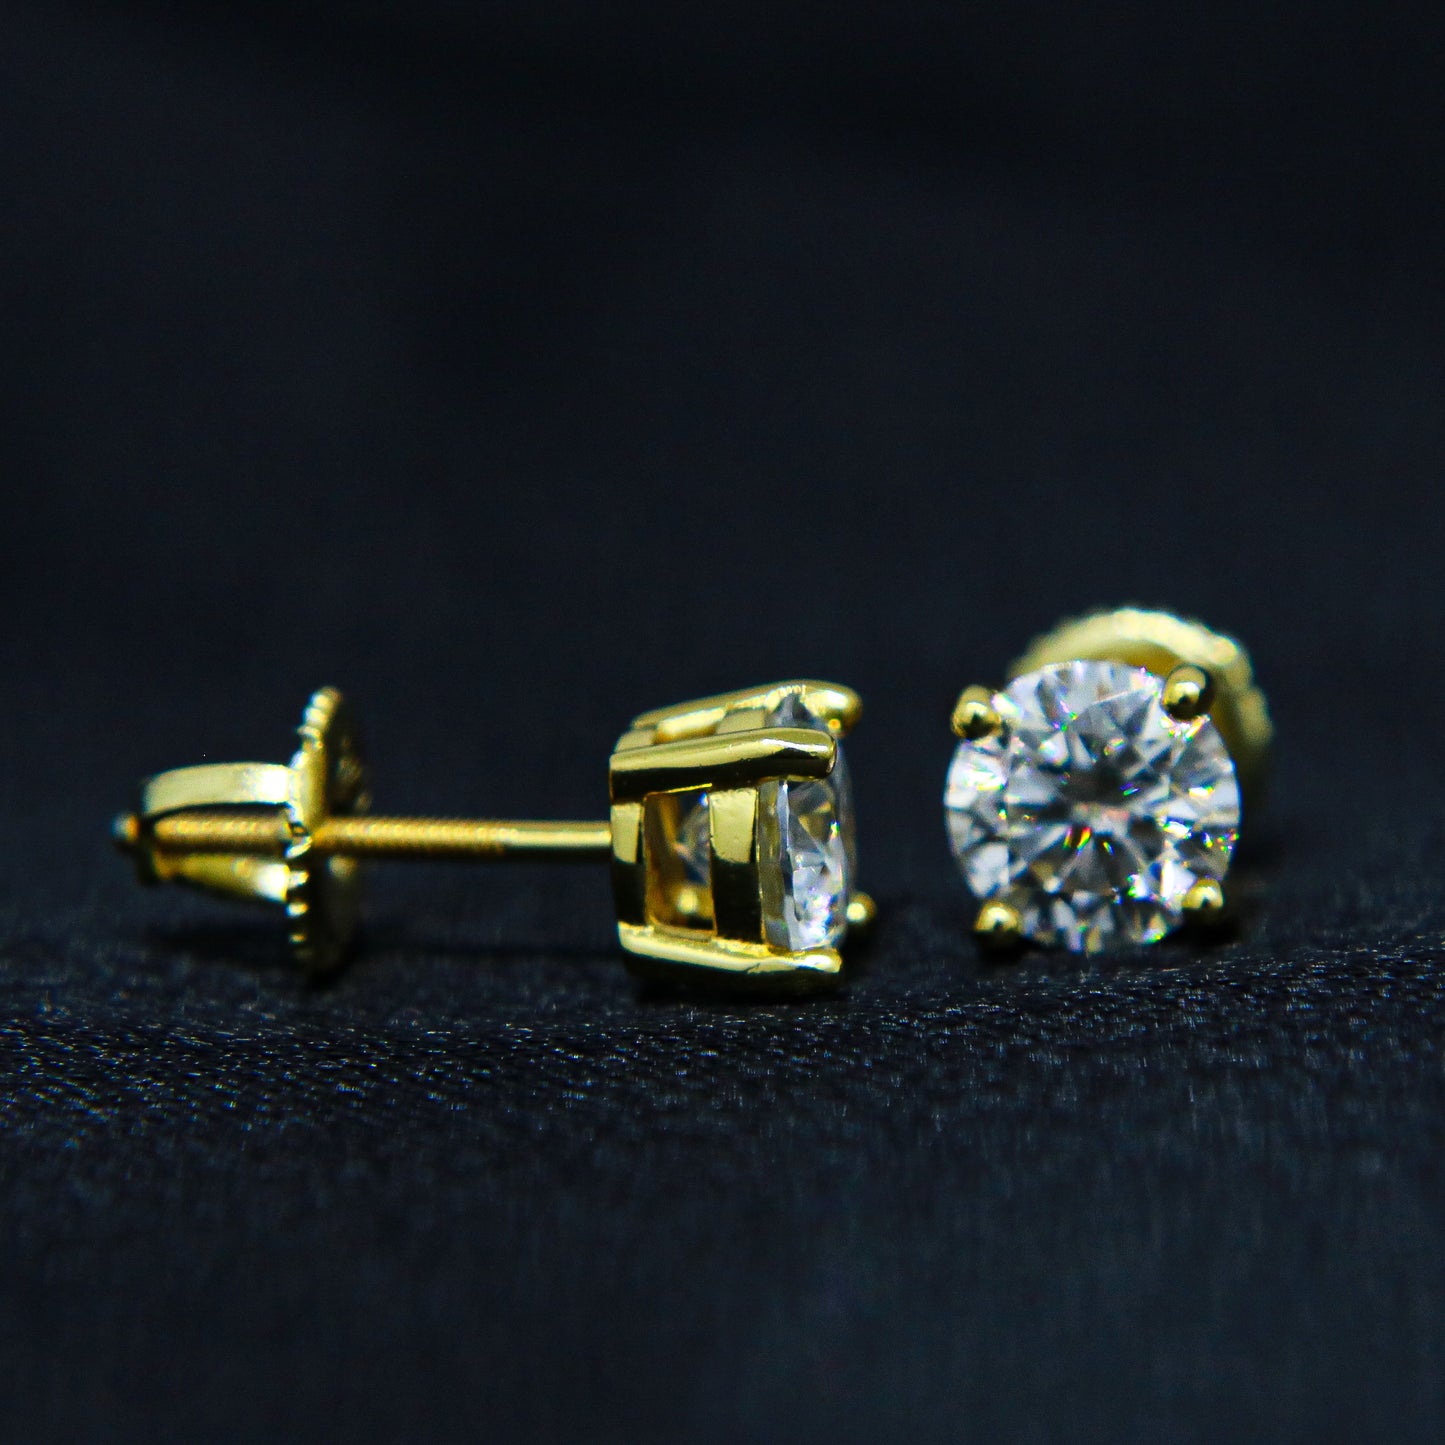 VVS Moissanite 6mm Round Cut Stud Earrings - Gold over 925 Silver